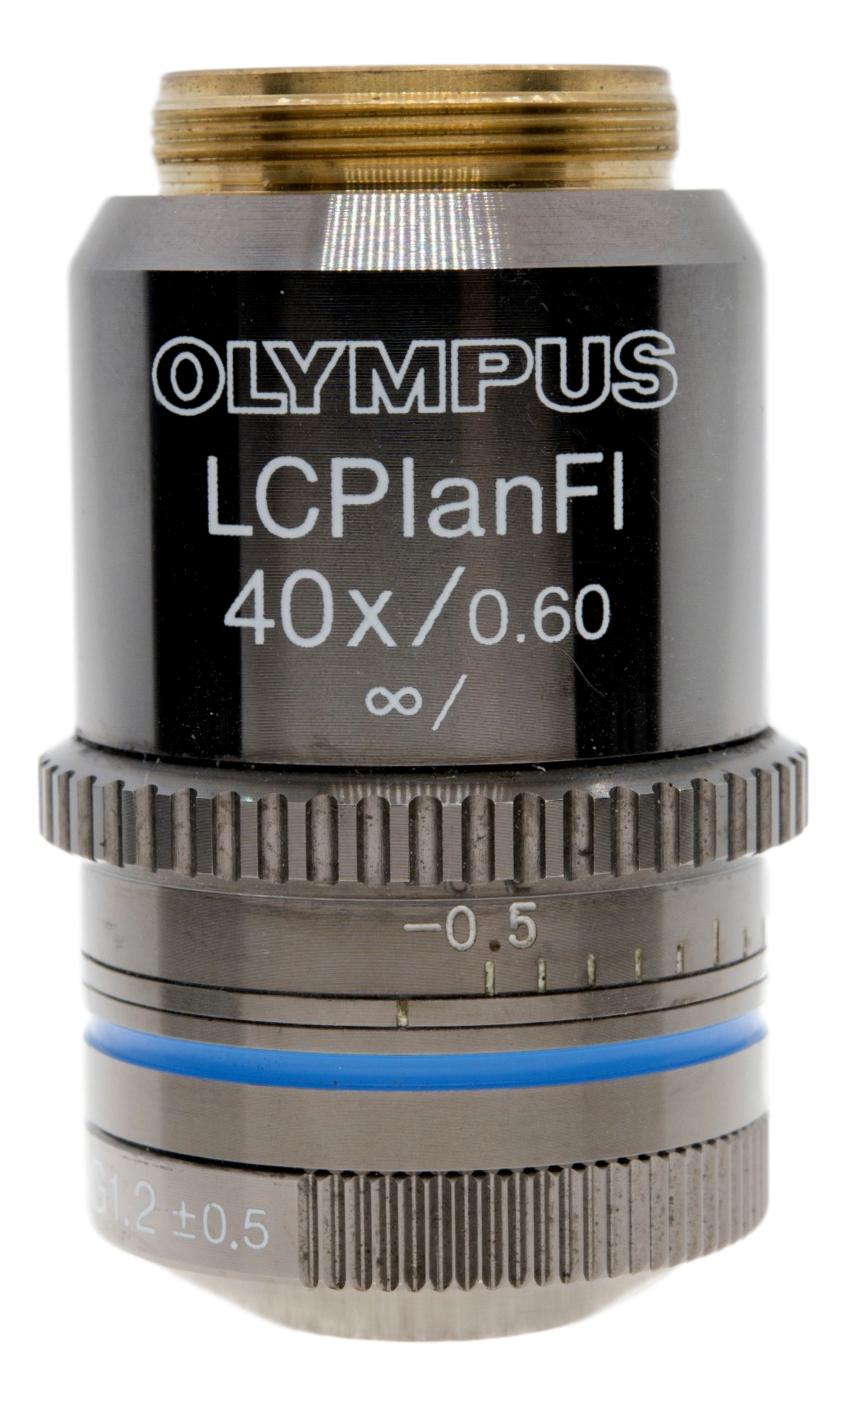 Olympus 40x LCPlanFL Infinity-Corrected / Correction-Collar Objective